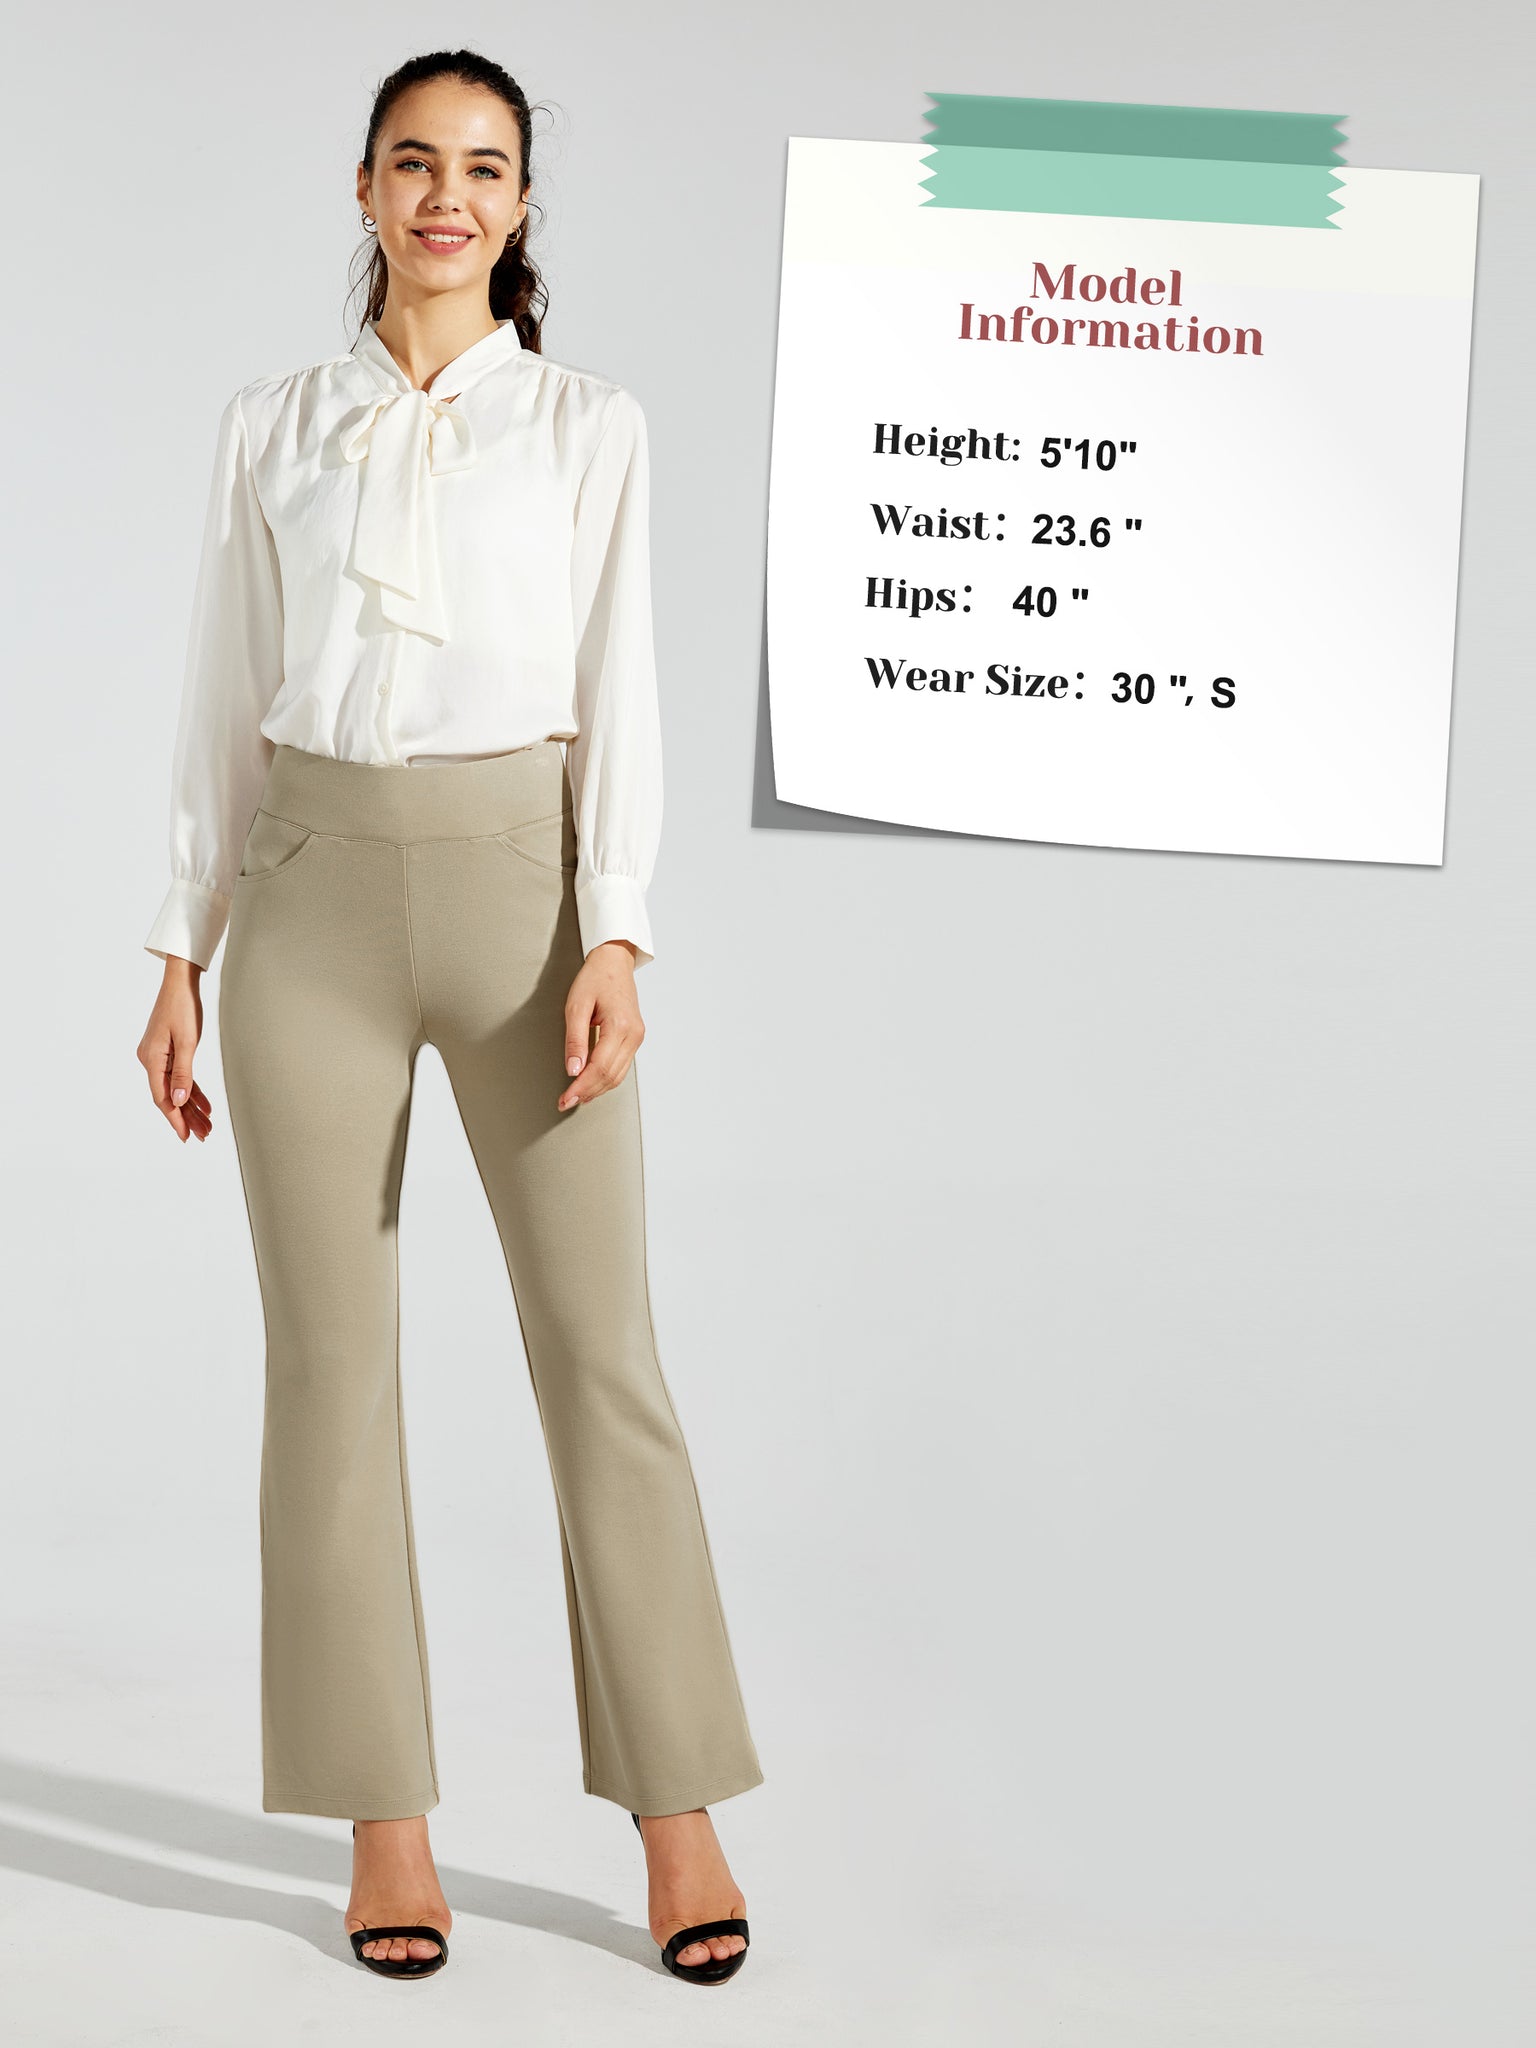 Women's Pull-On Slim Bootcut Pants_LightKhaki_model7